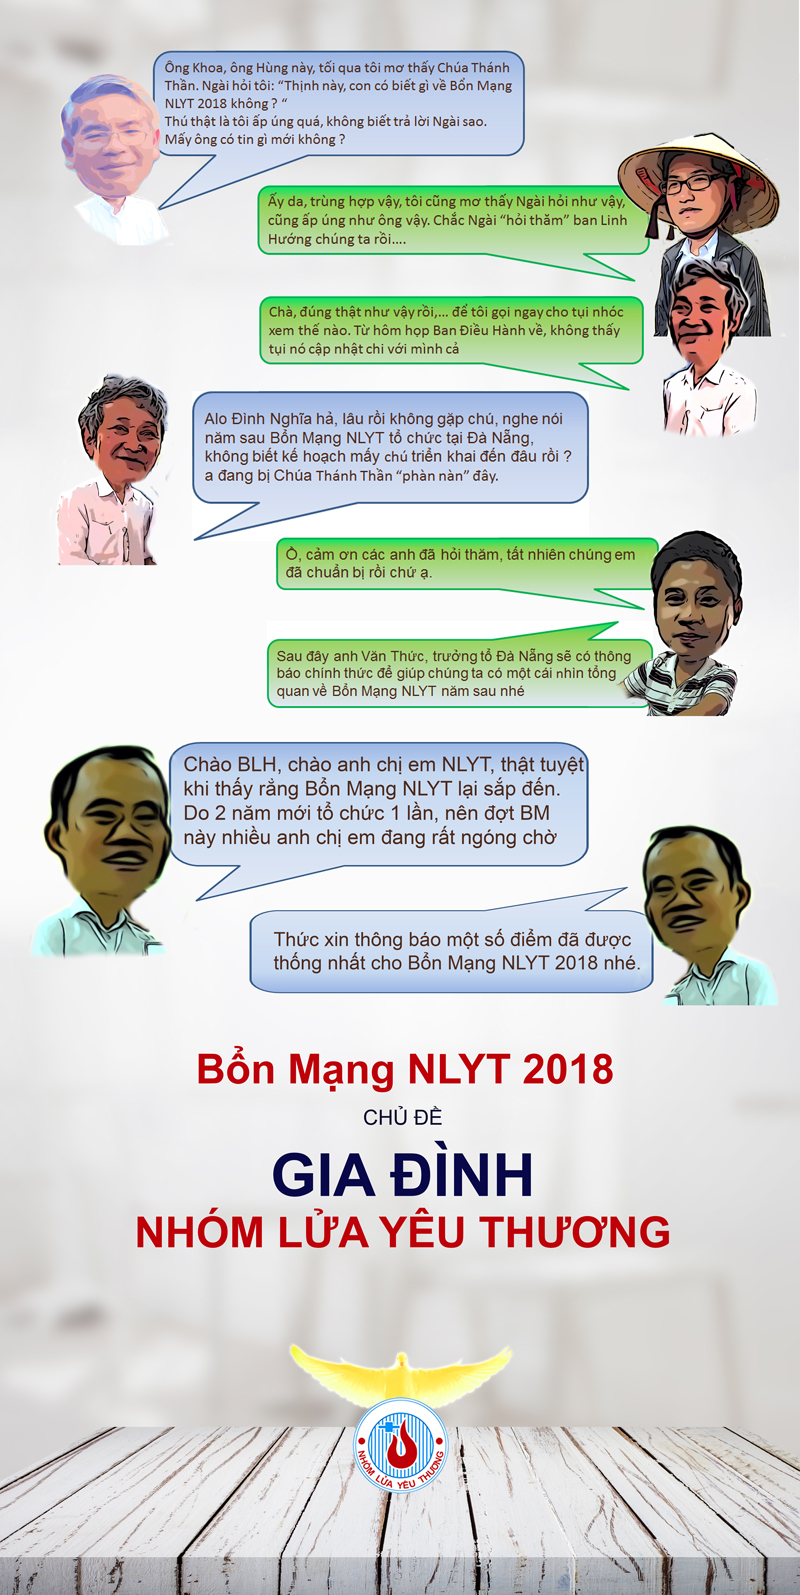 Bon Mang NLYT 2018 Da Nang